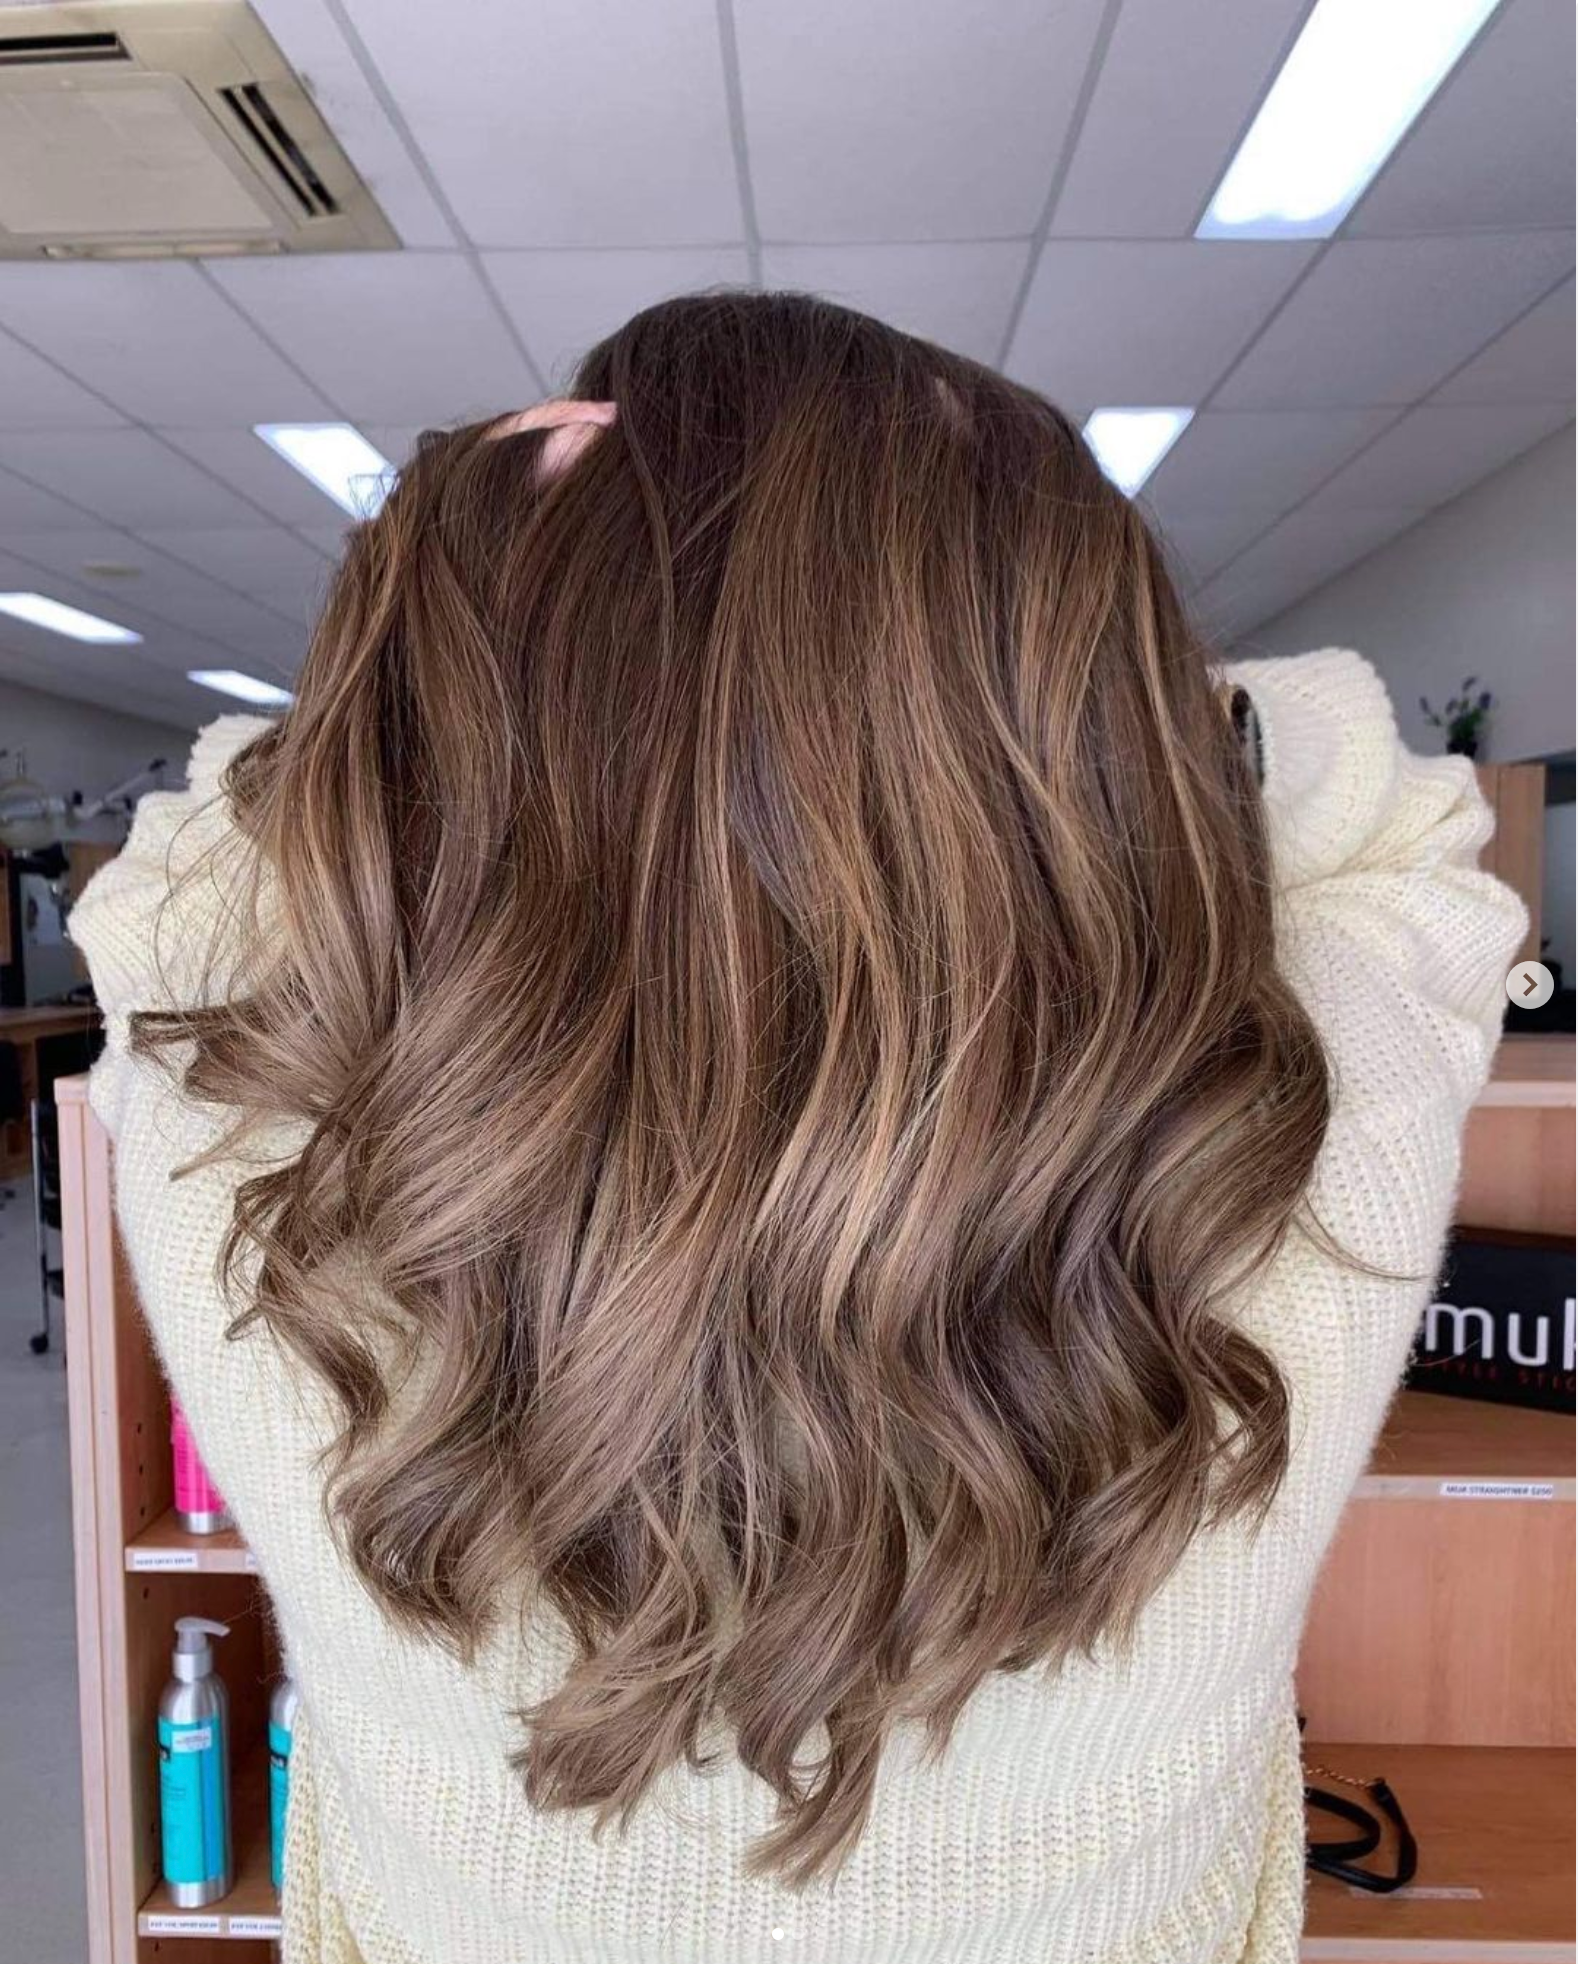 Beautiful Hairstyle Of Young Woman - Salon in Ballarat, VIC